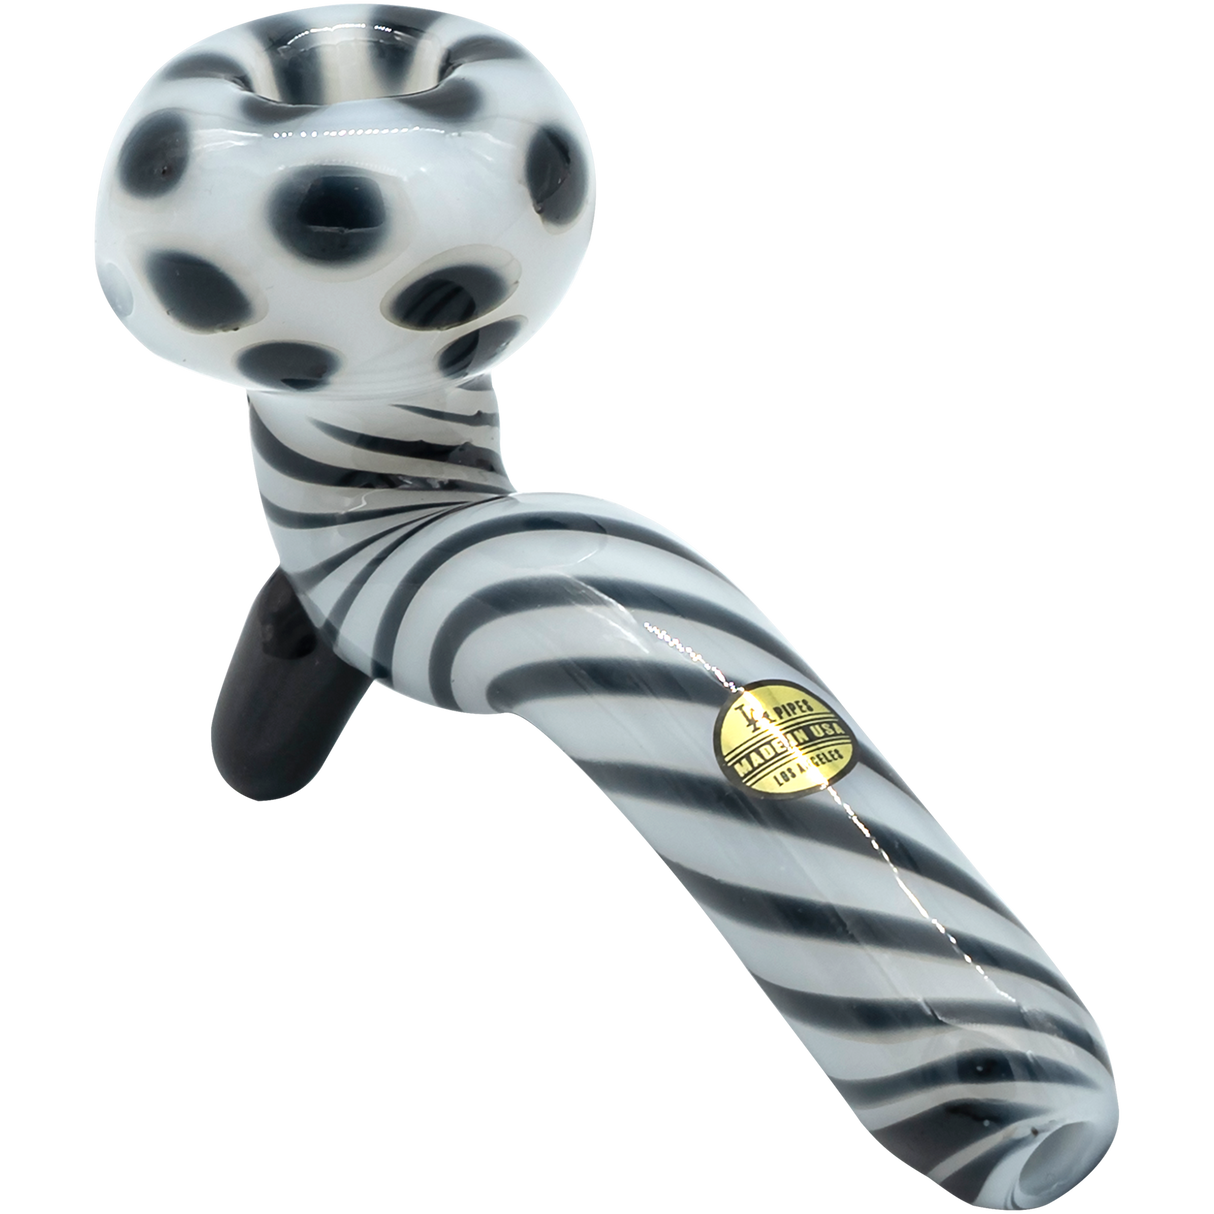 LA Pipes Bone White Sherlock Glass Pipe with Striped Design - Angled View